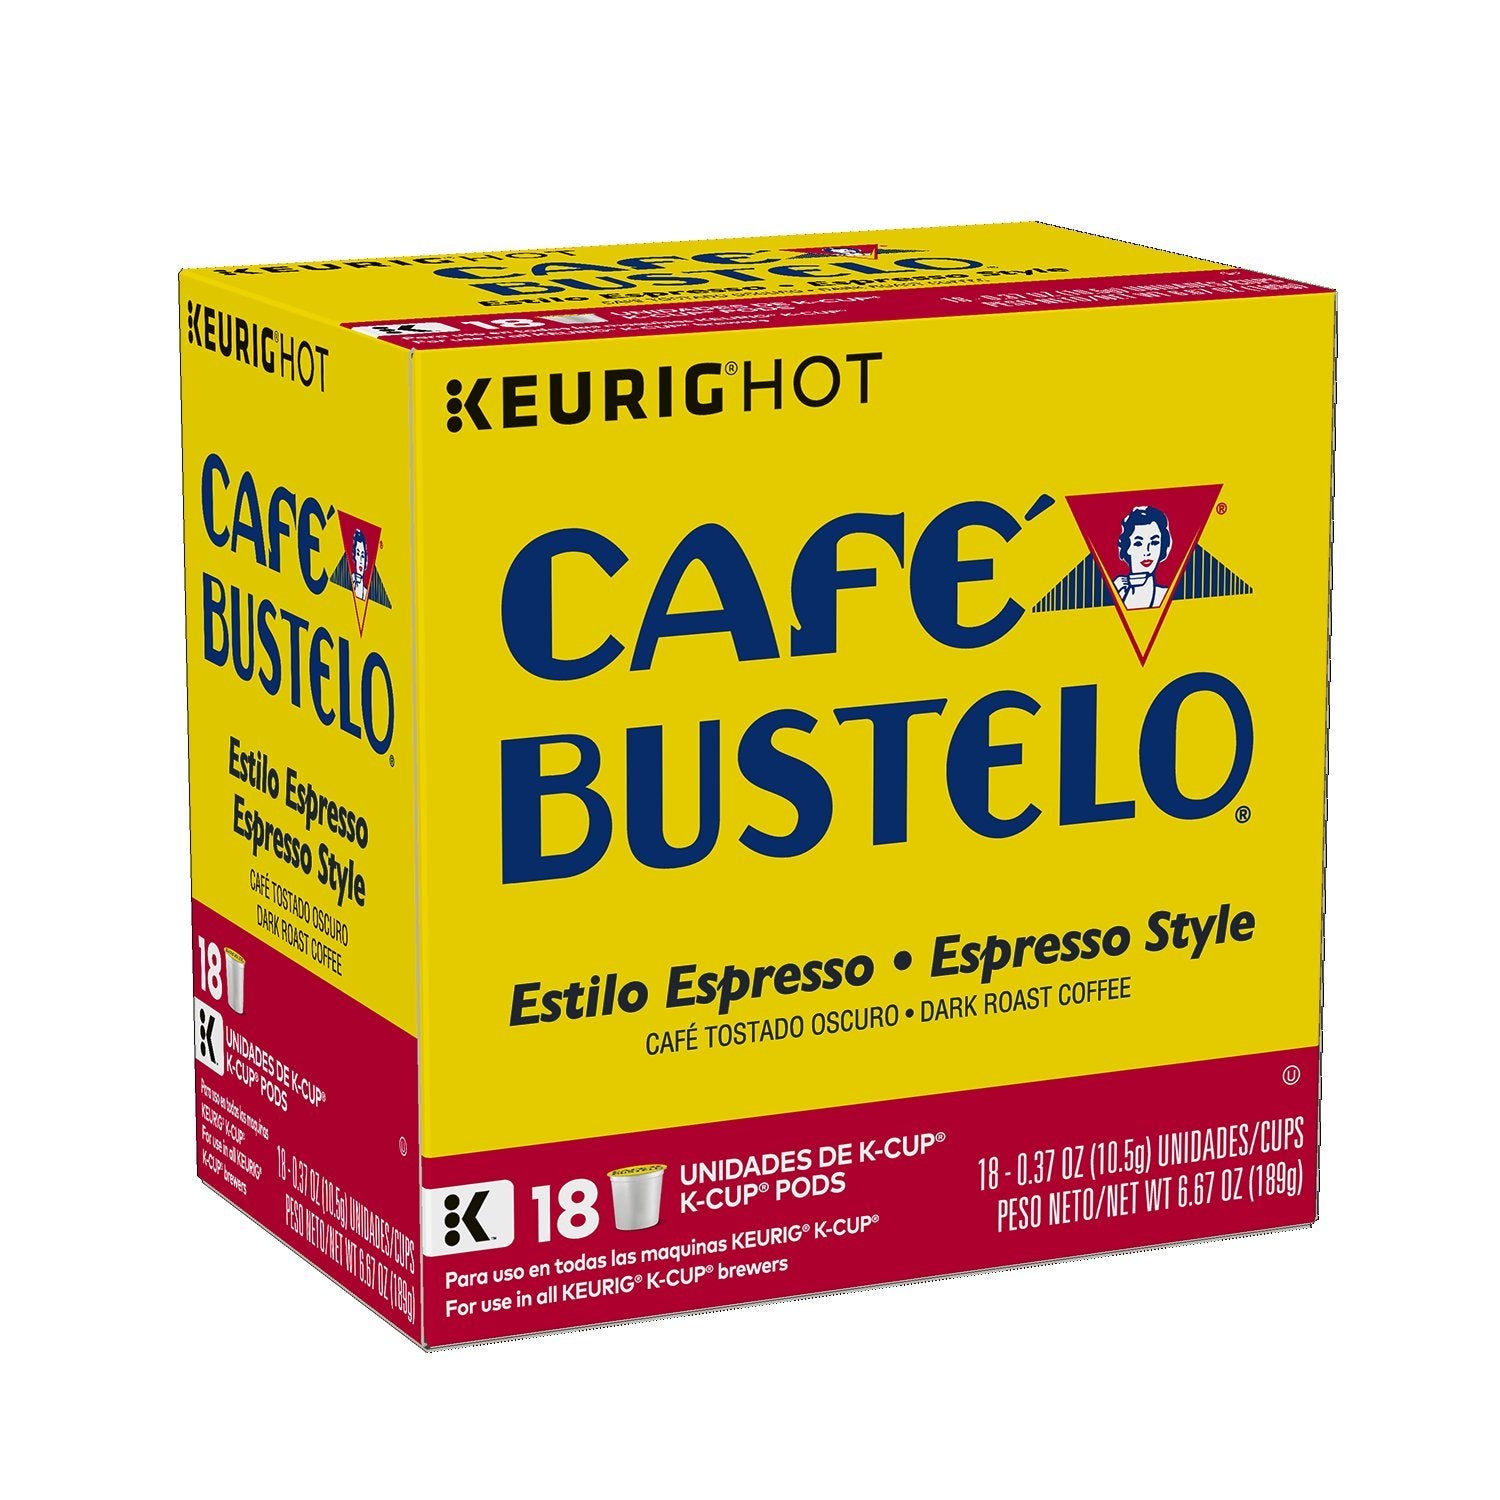 Café Bustelo Espresso Style K-Cup Pods for Keurig K-Cup Brewers, Dark Roast Coffee, 18 Count